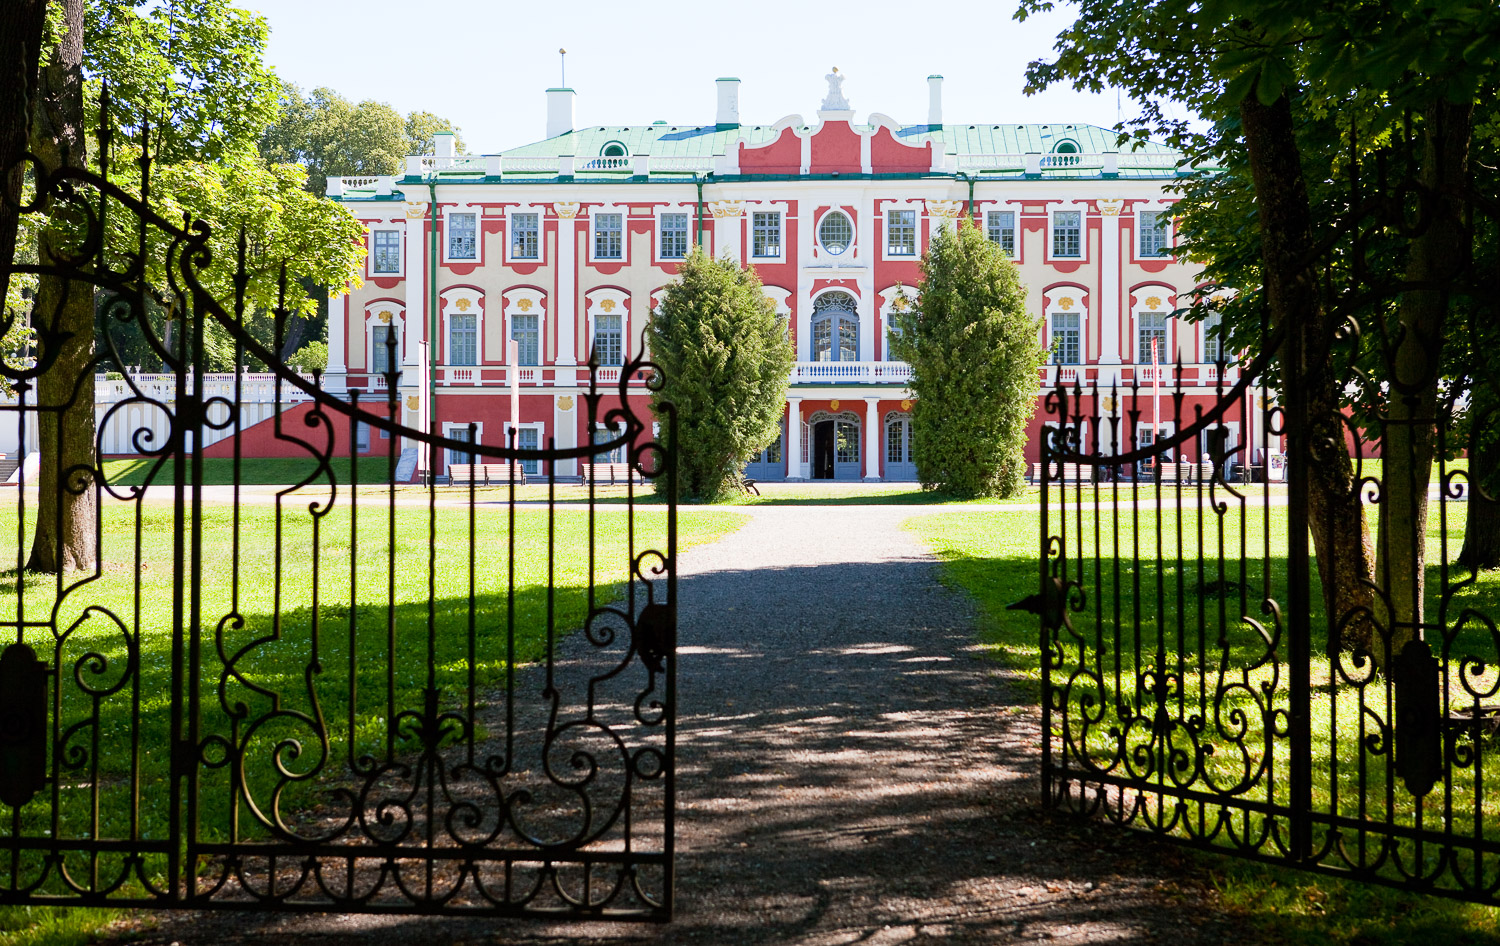 Kadriorg Park – Tallinn’s oldest and grandest park